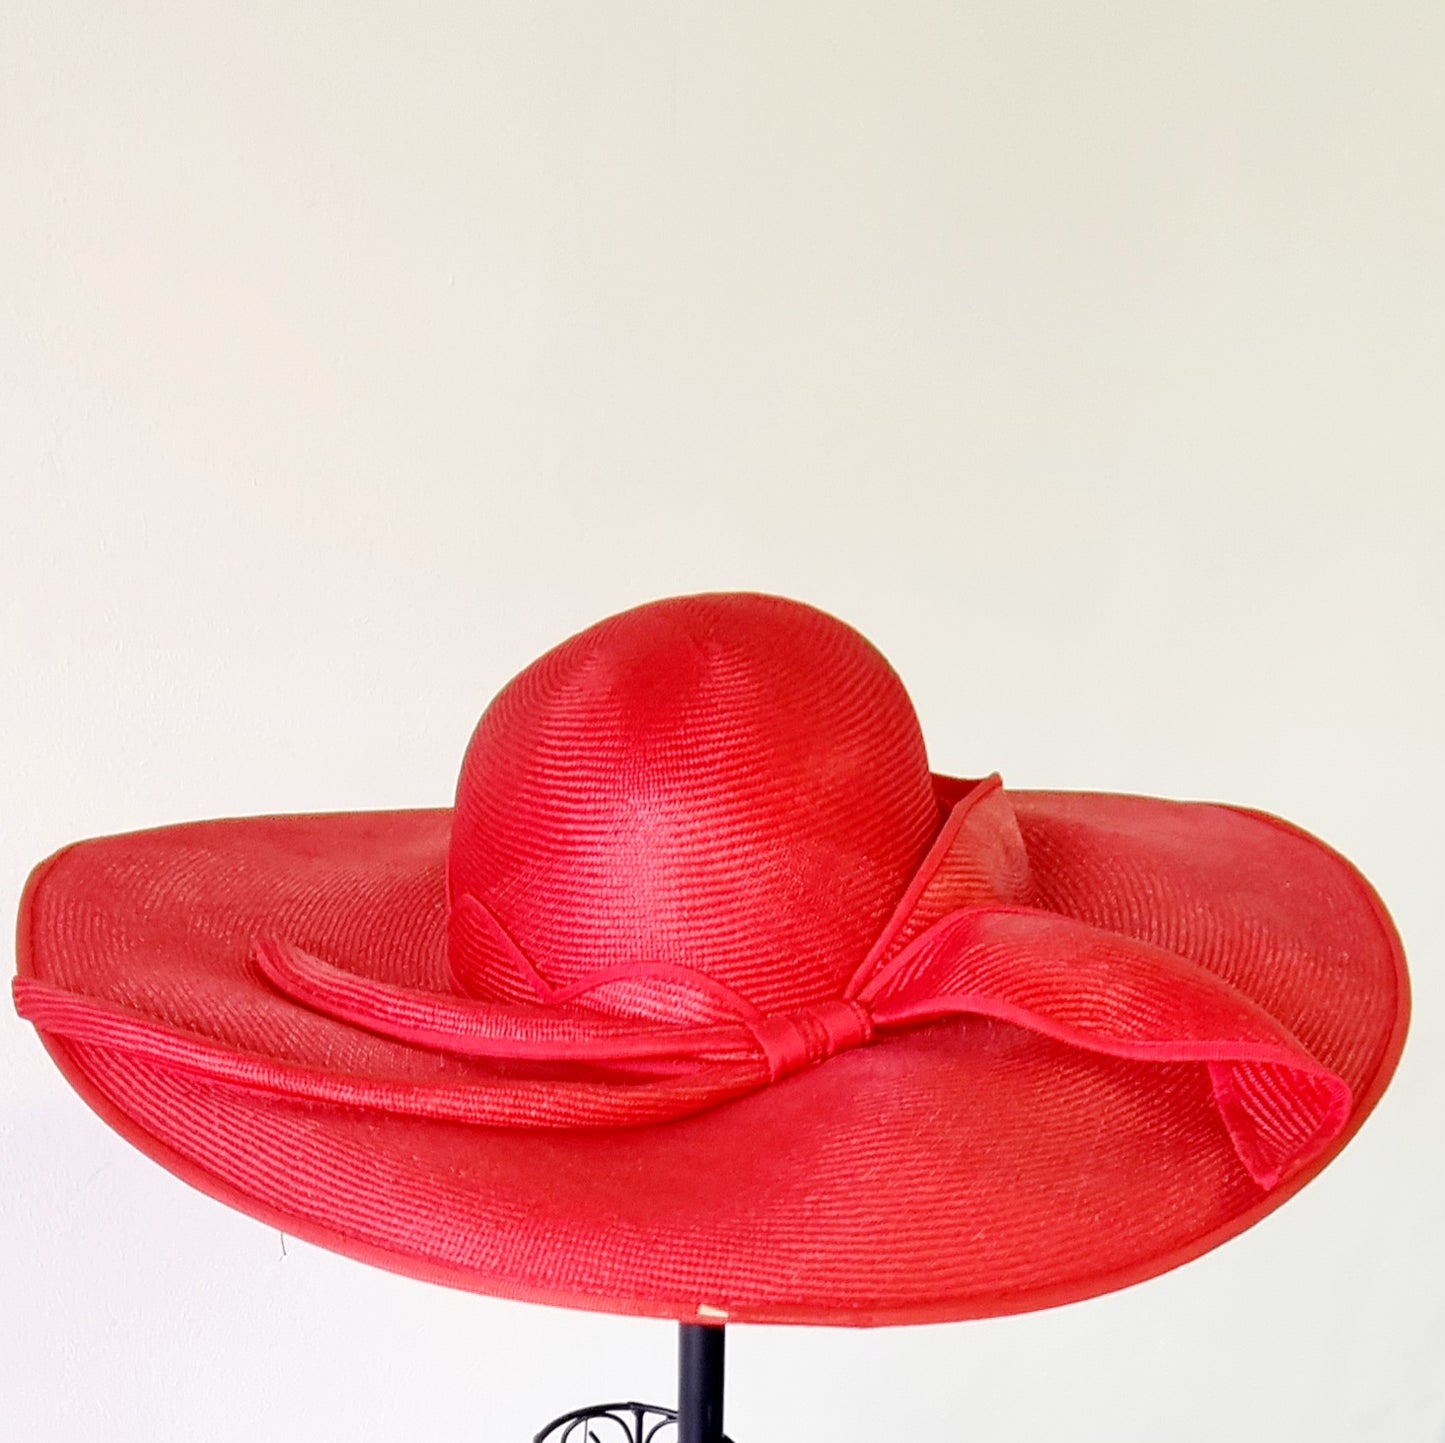 Derbers - Vintage Wide Brim Red Sun Hat